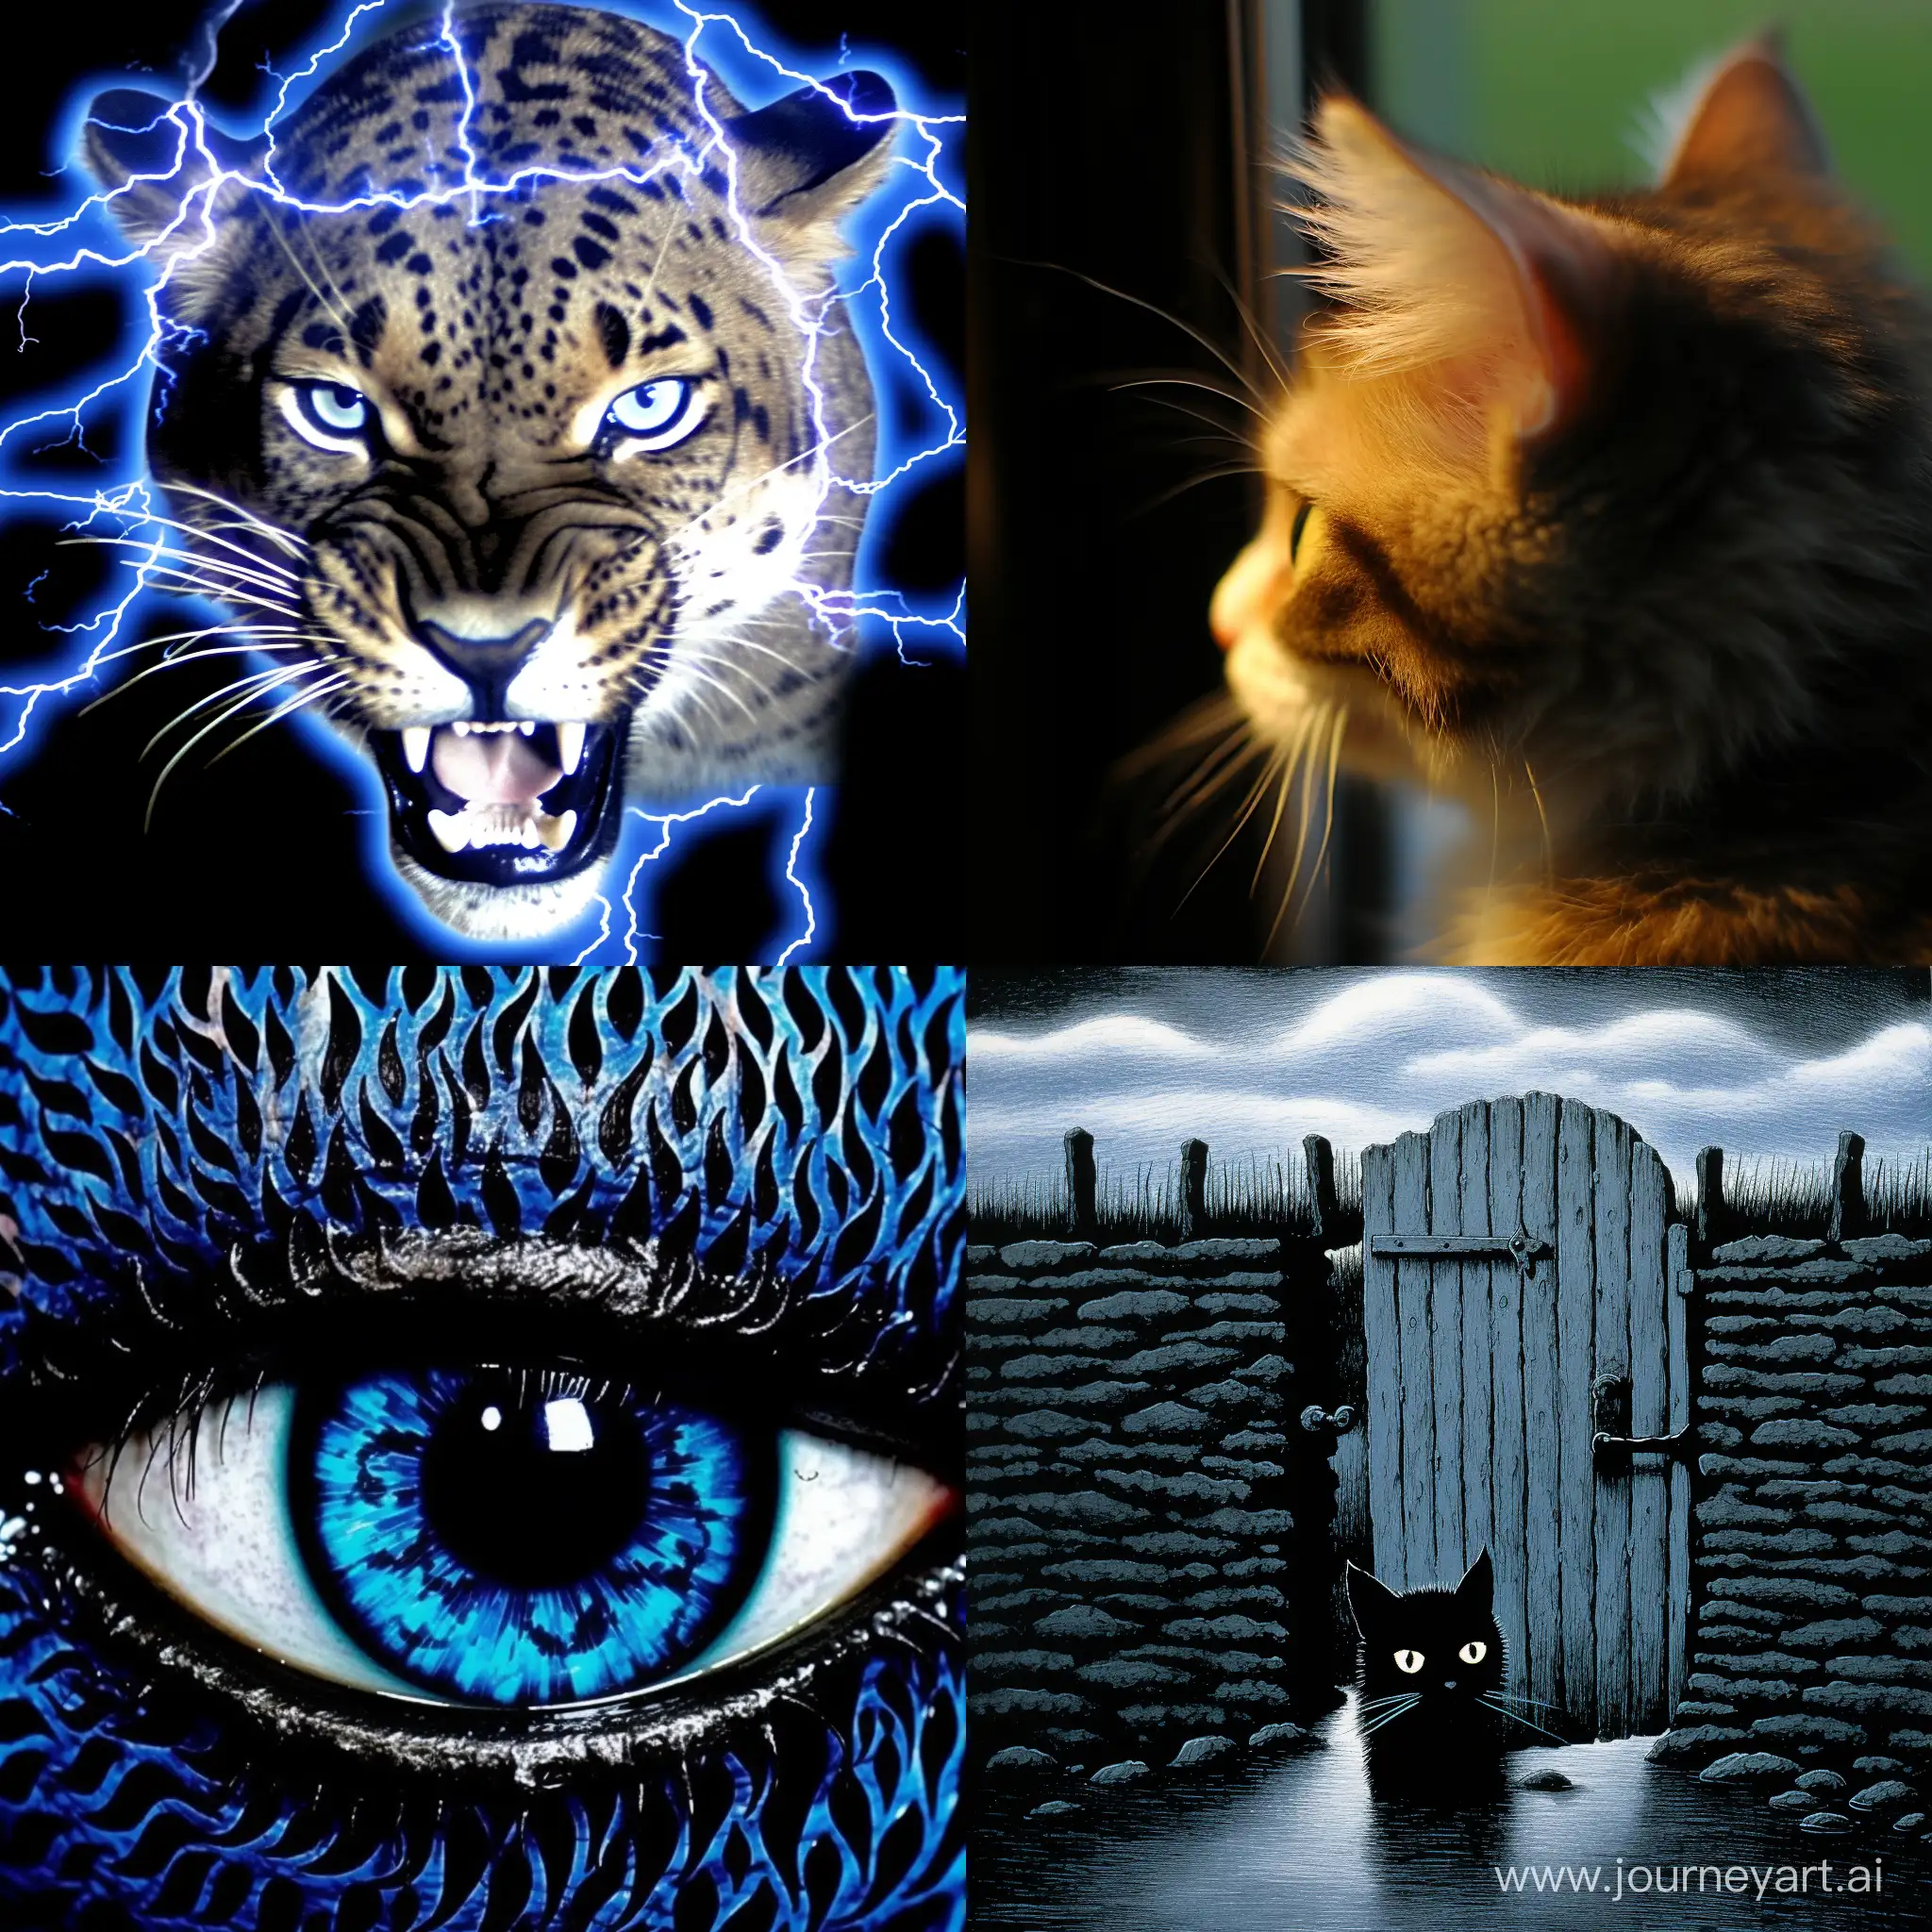 Enchanting-Fantasy-Scene-Blue-Cat-Bathed-in-Cinematic-Lighting